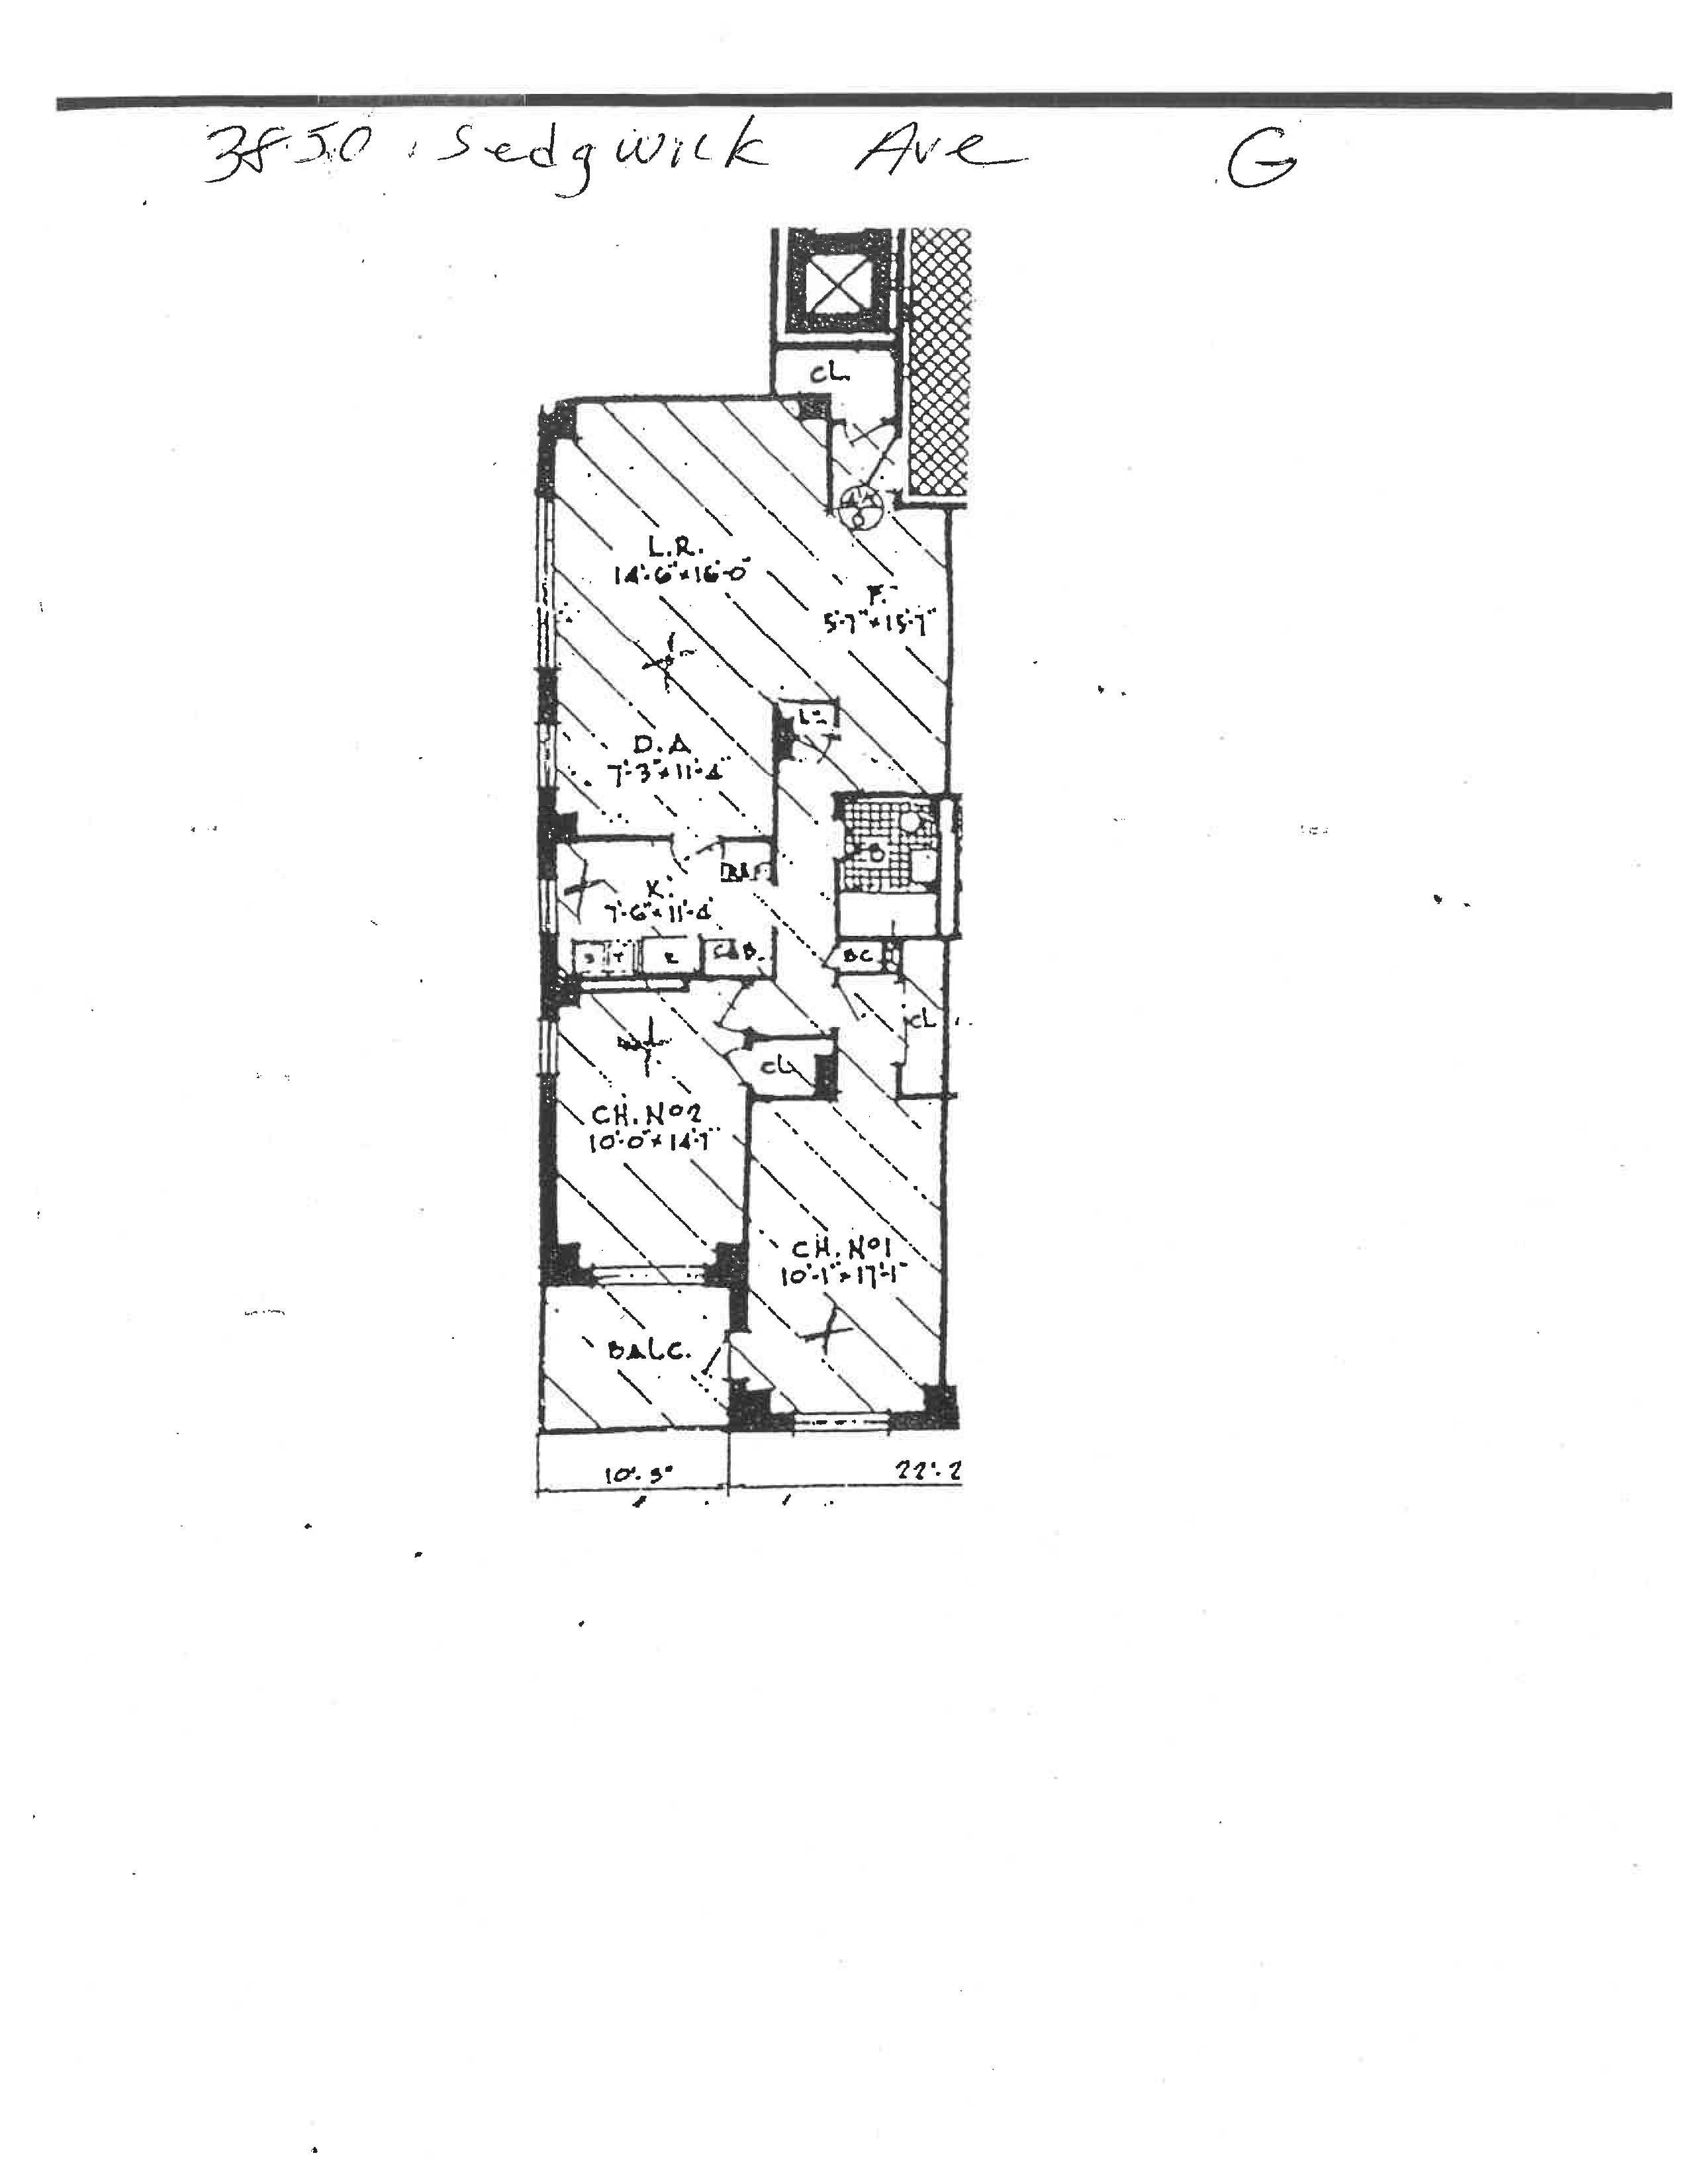 Floorplan for 3850 Sedgwick Avenue, 8-G